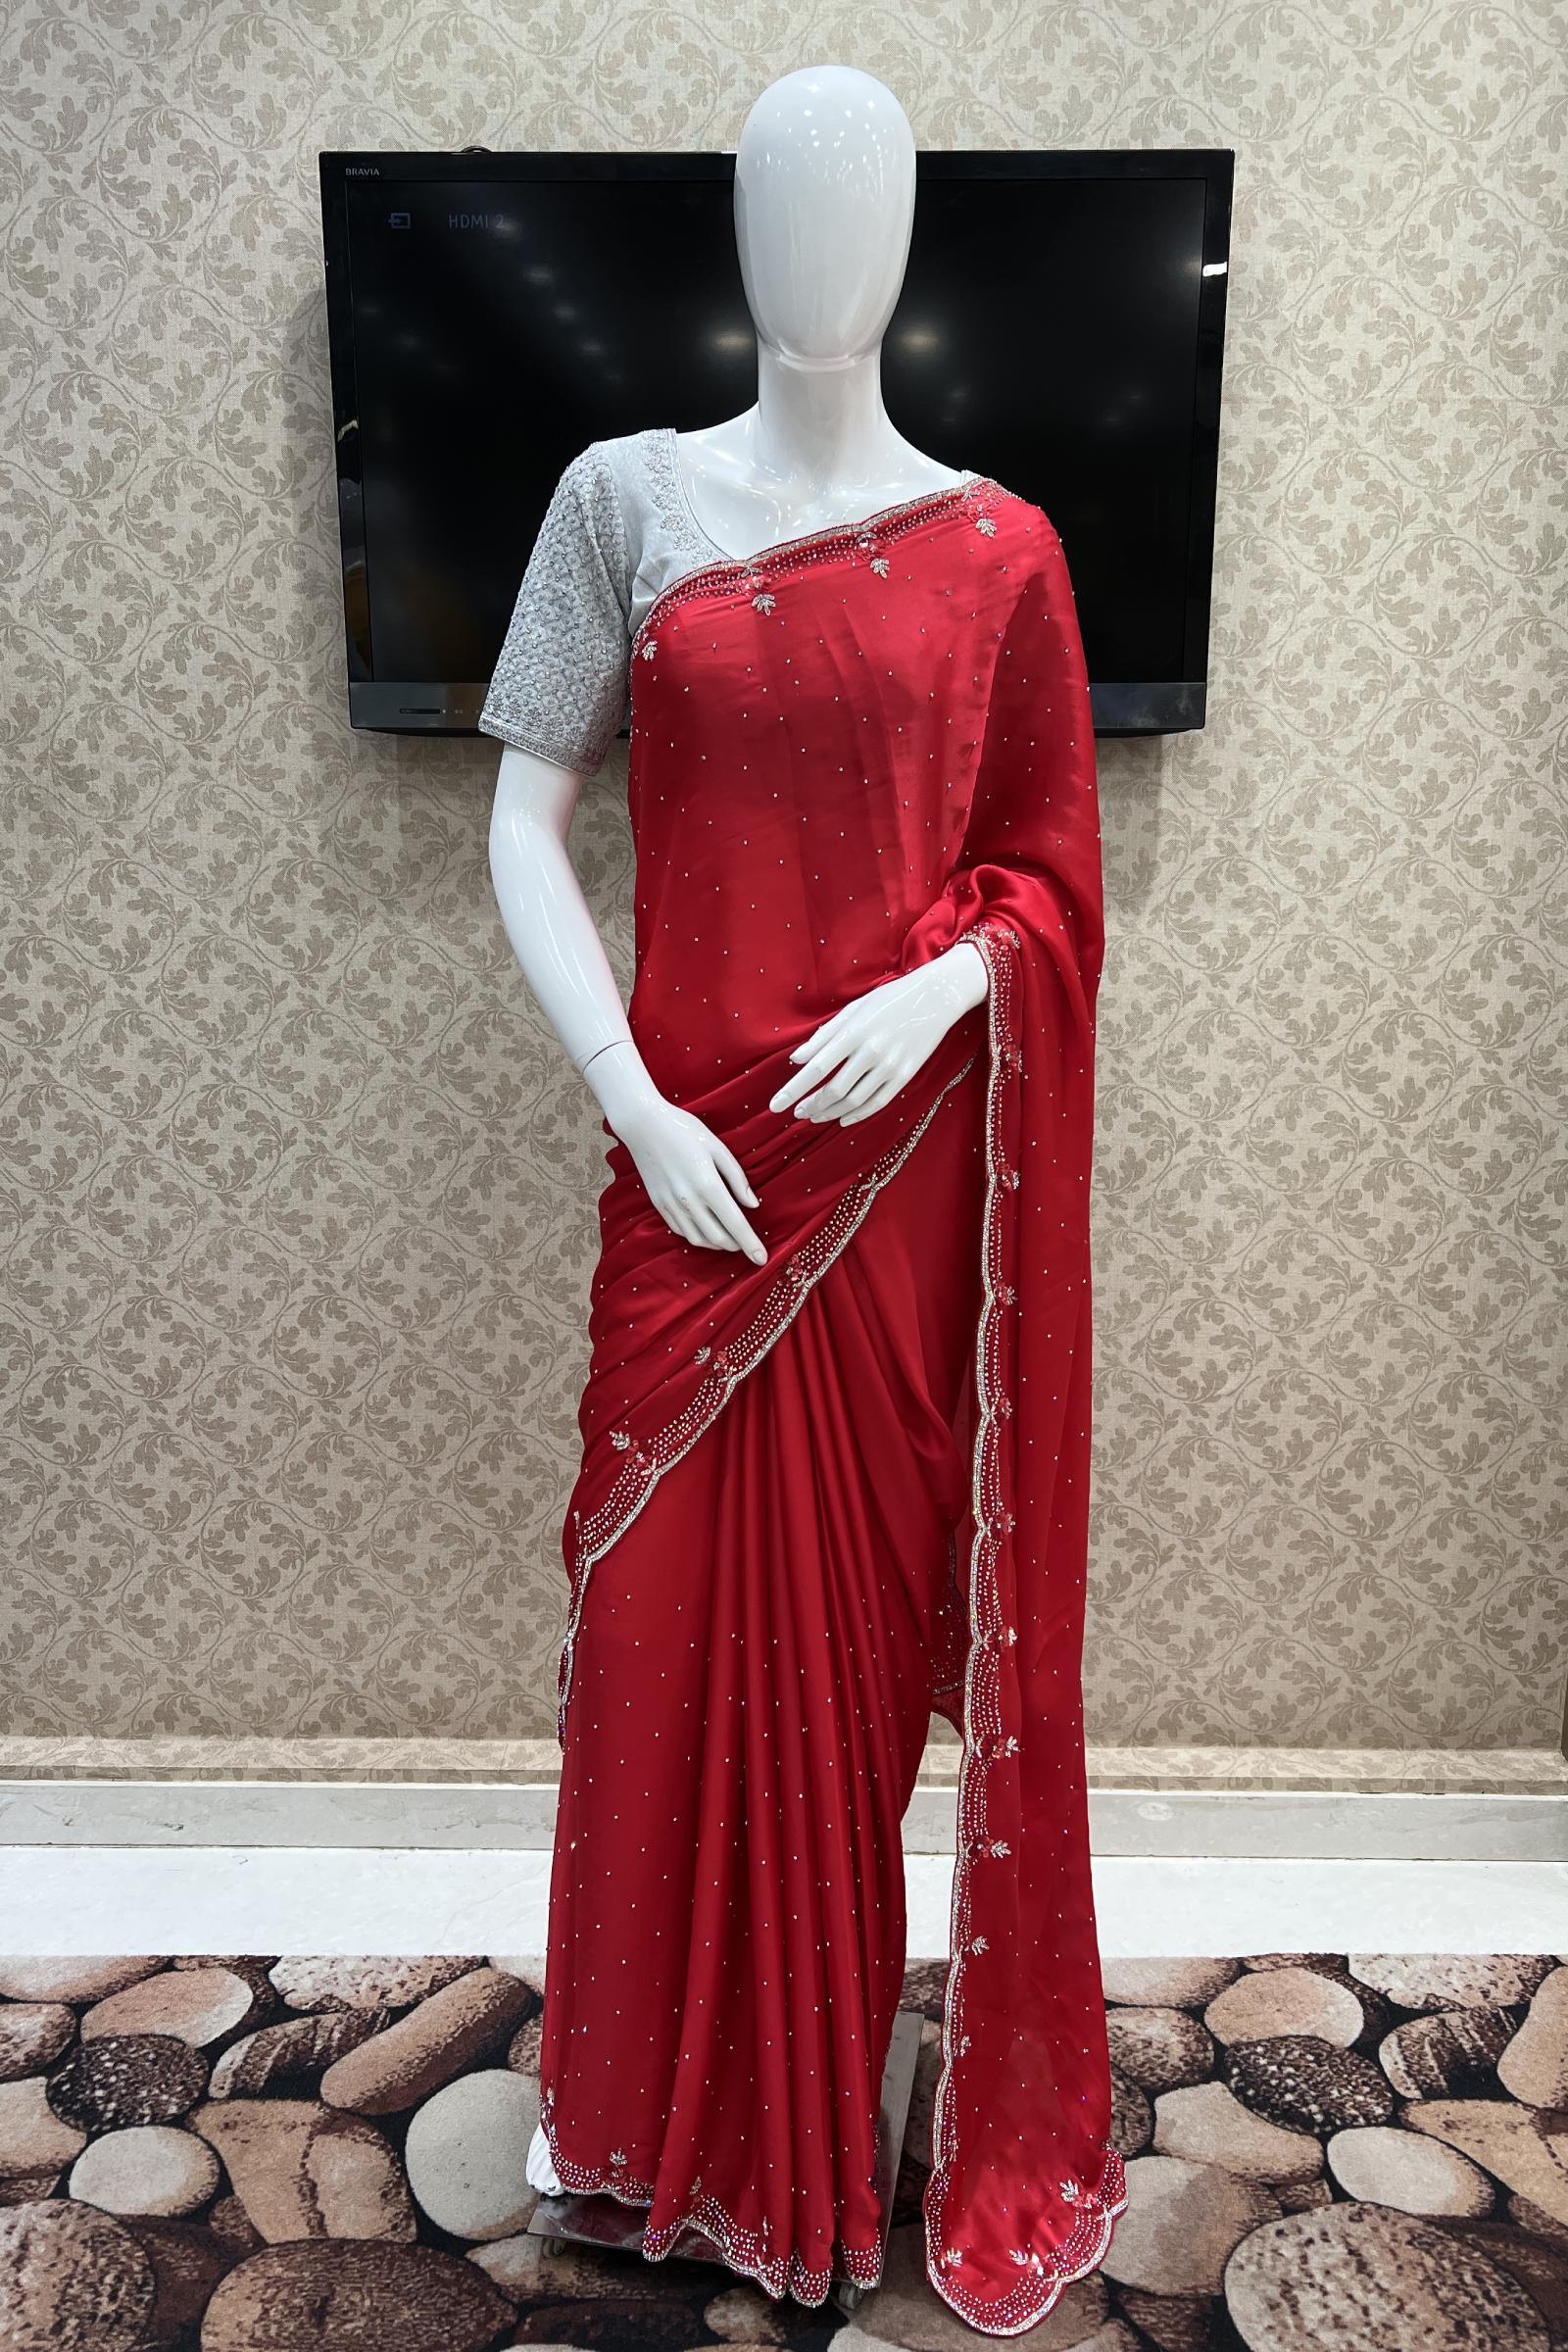 Parnika Reddy Exclusive wedding sarees - * *New half saree model arrivals  ***Half saree sets*** *Exclusive high quality anti banarasi lehengas with  cut work voni and designer blouse * *Lehanga :Dark pink